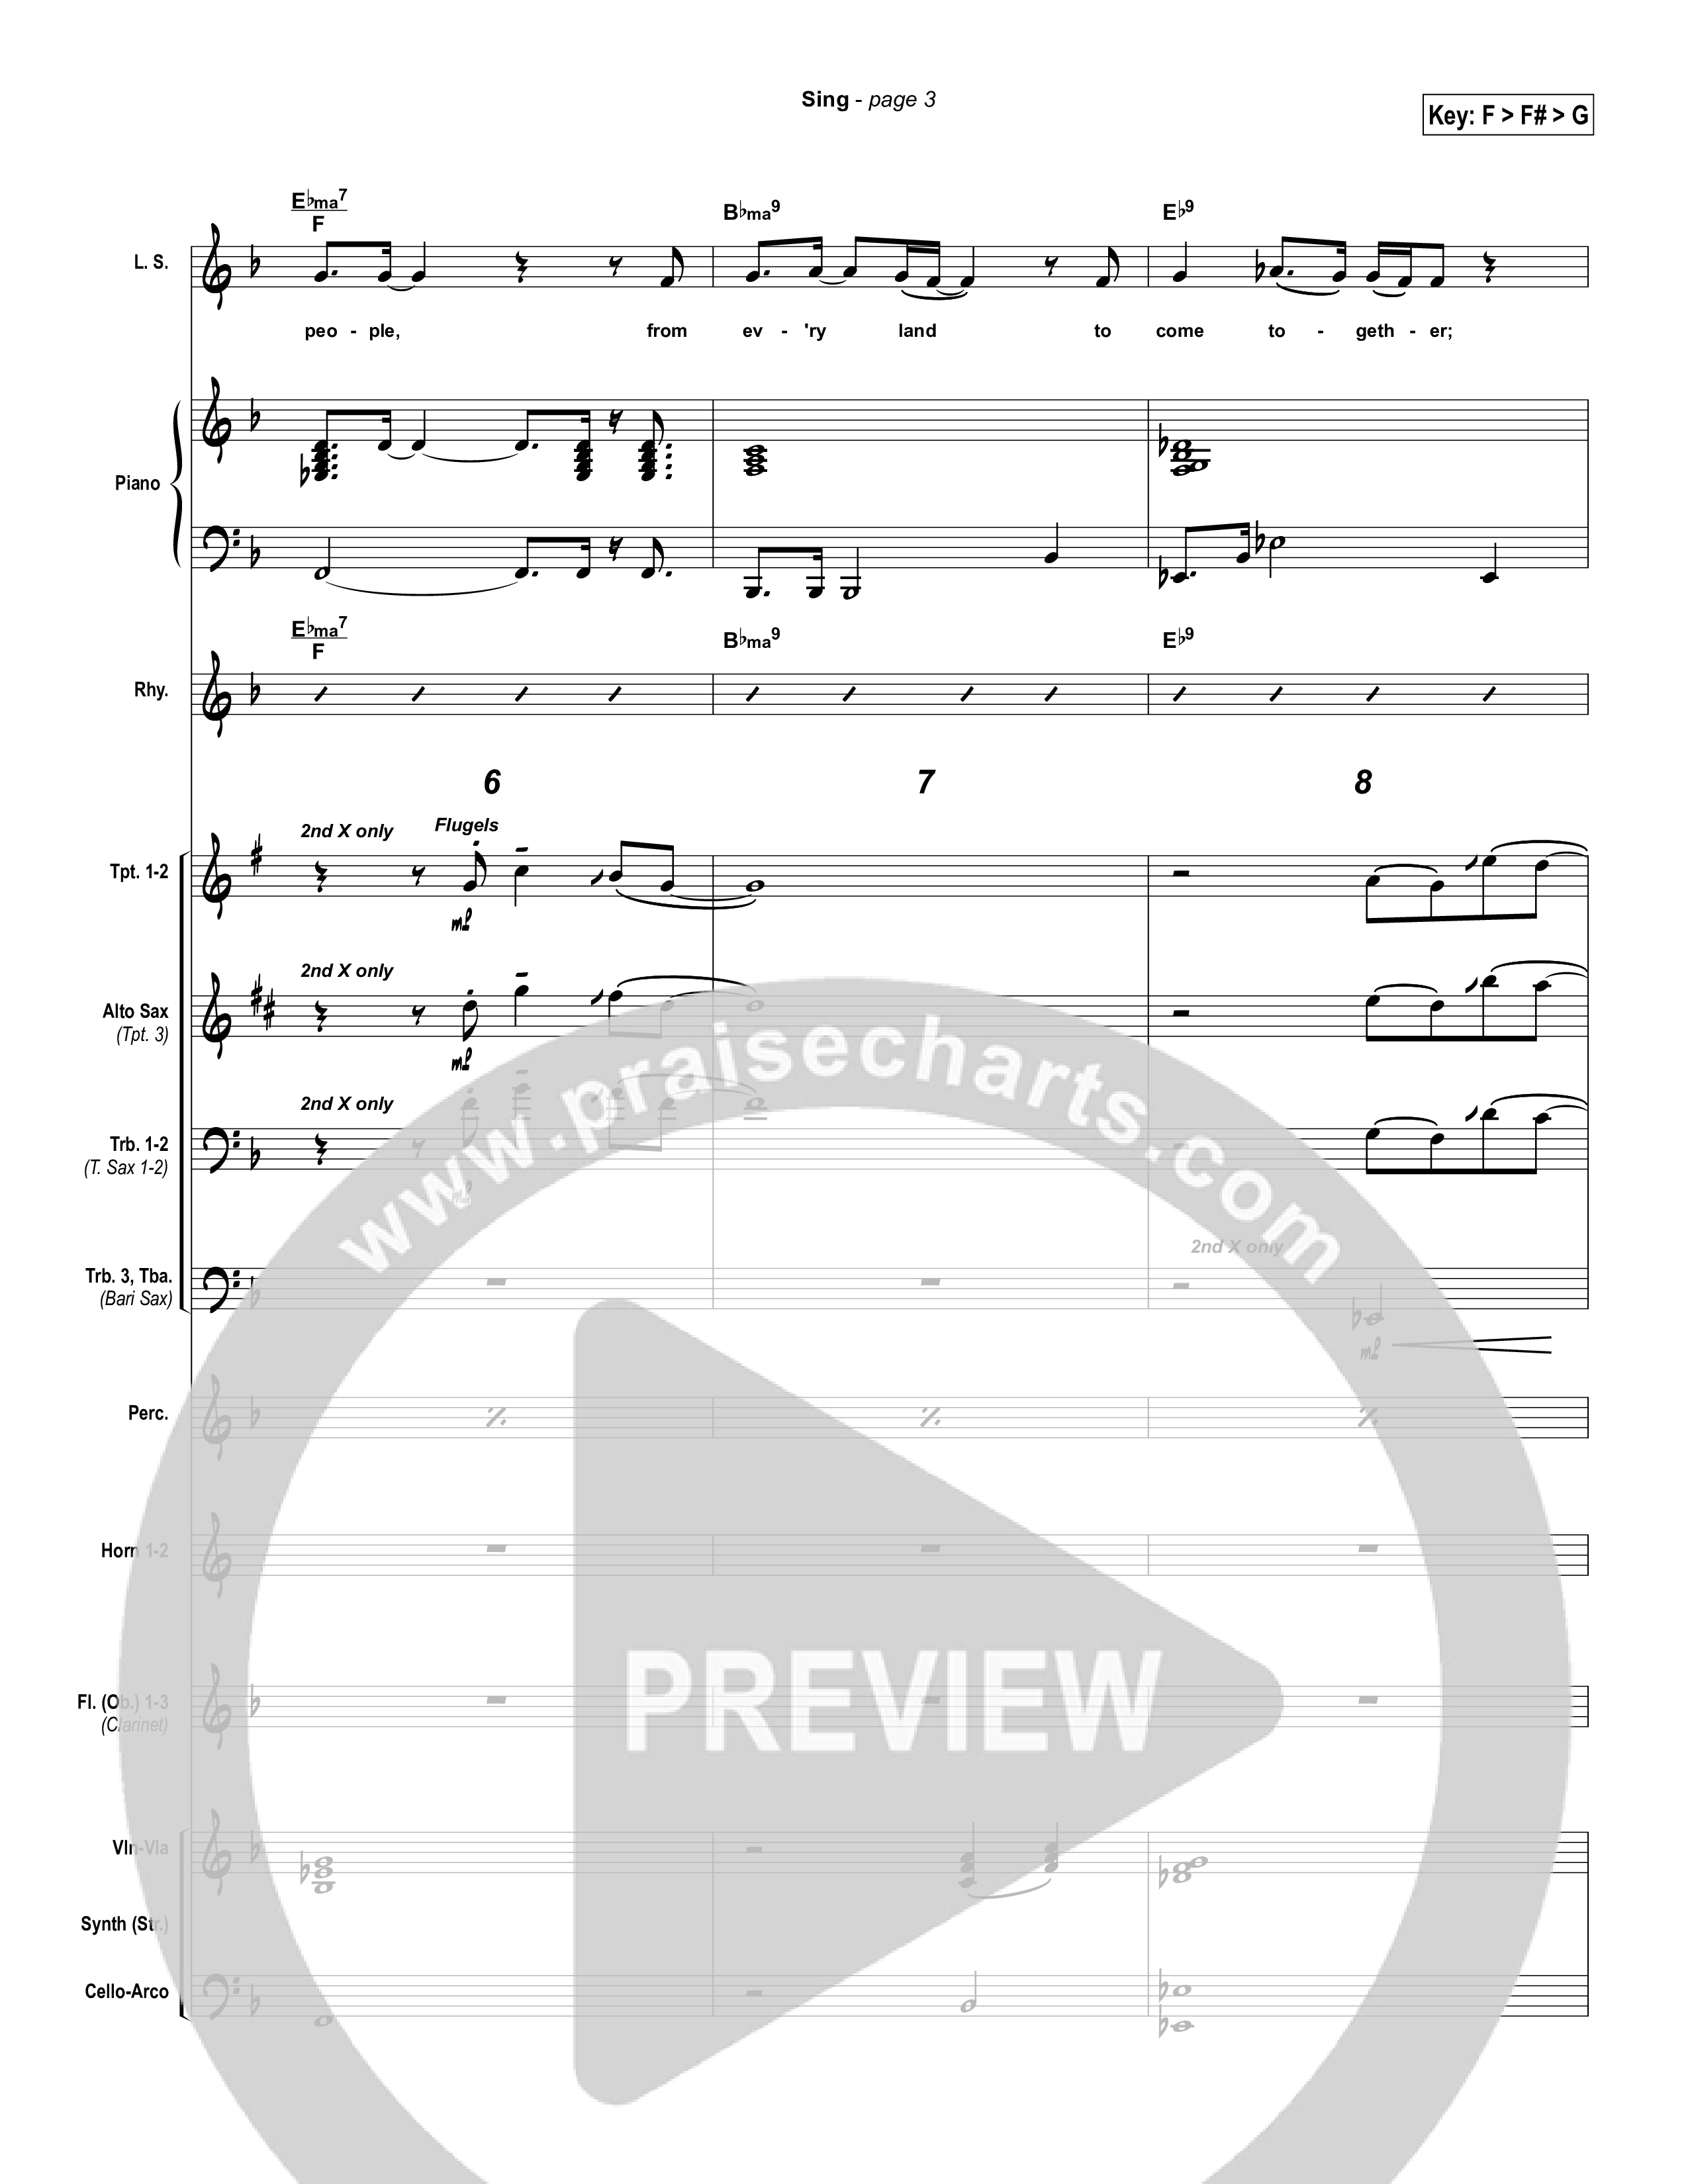 Sing Conductor's Score (Lakewood Church)